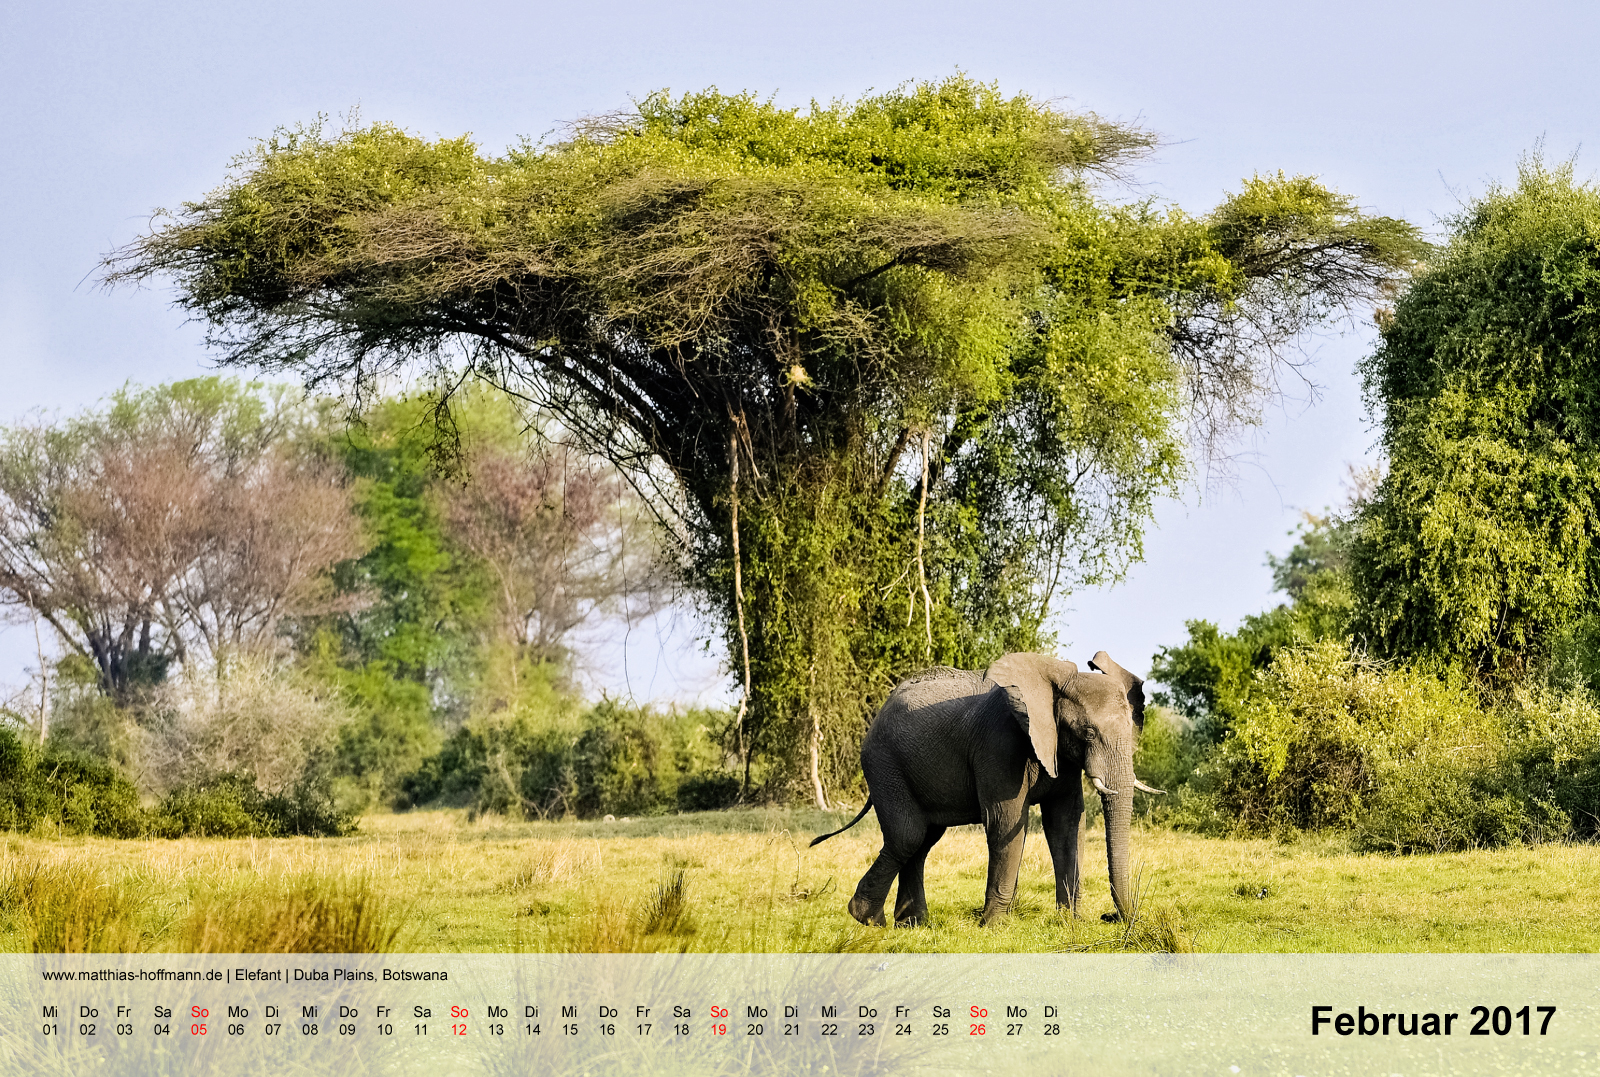 Elefant | Duba Plains, Botswana | Kalender 2017 - Februar